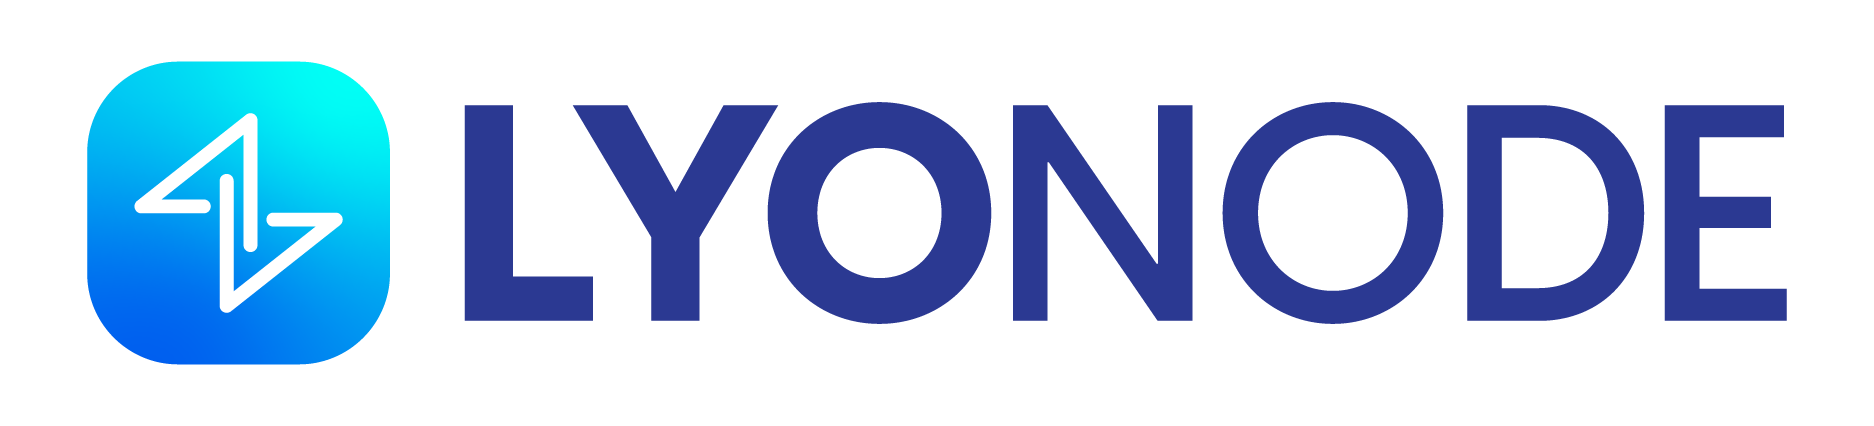 Lyomerchant logo